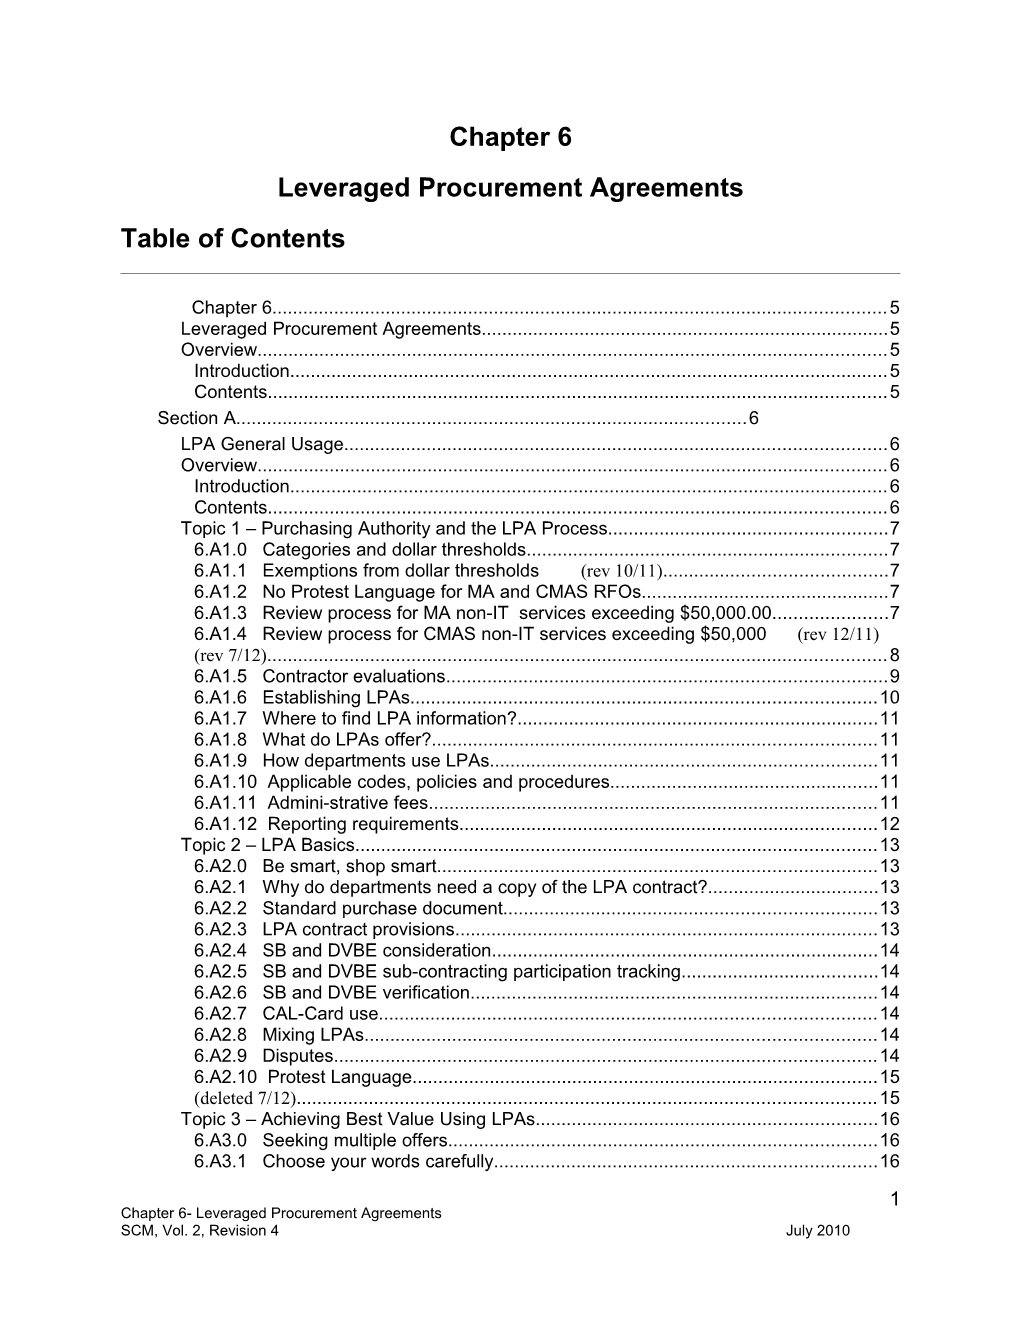 Leveraged Procurement Agreements s1